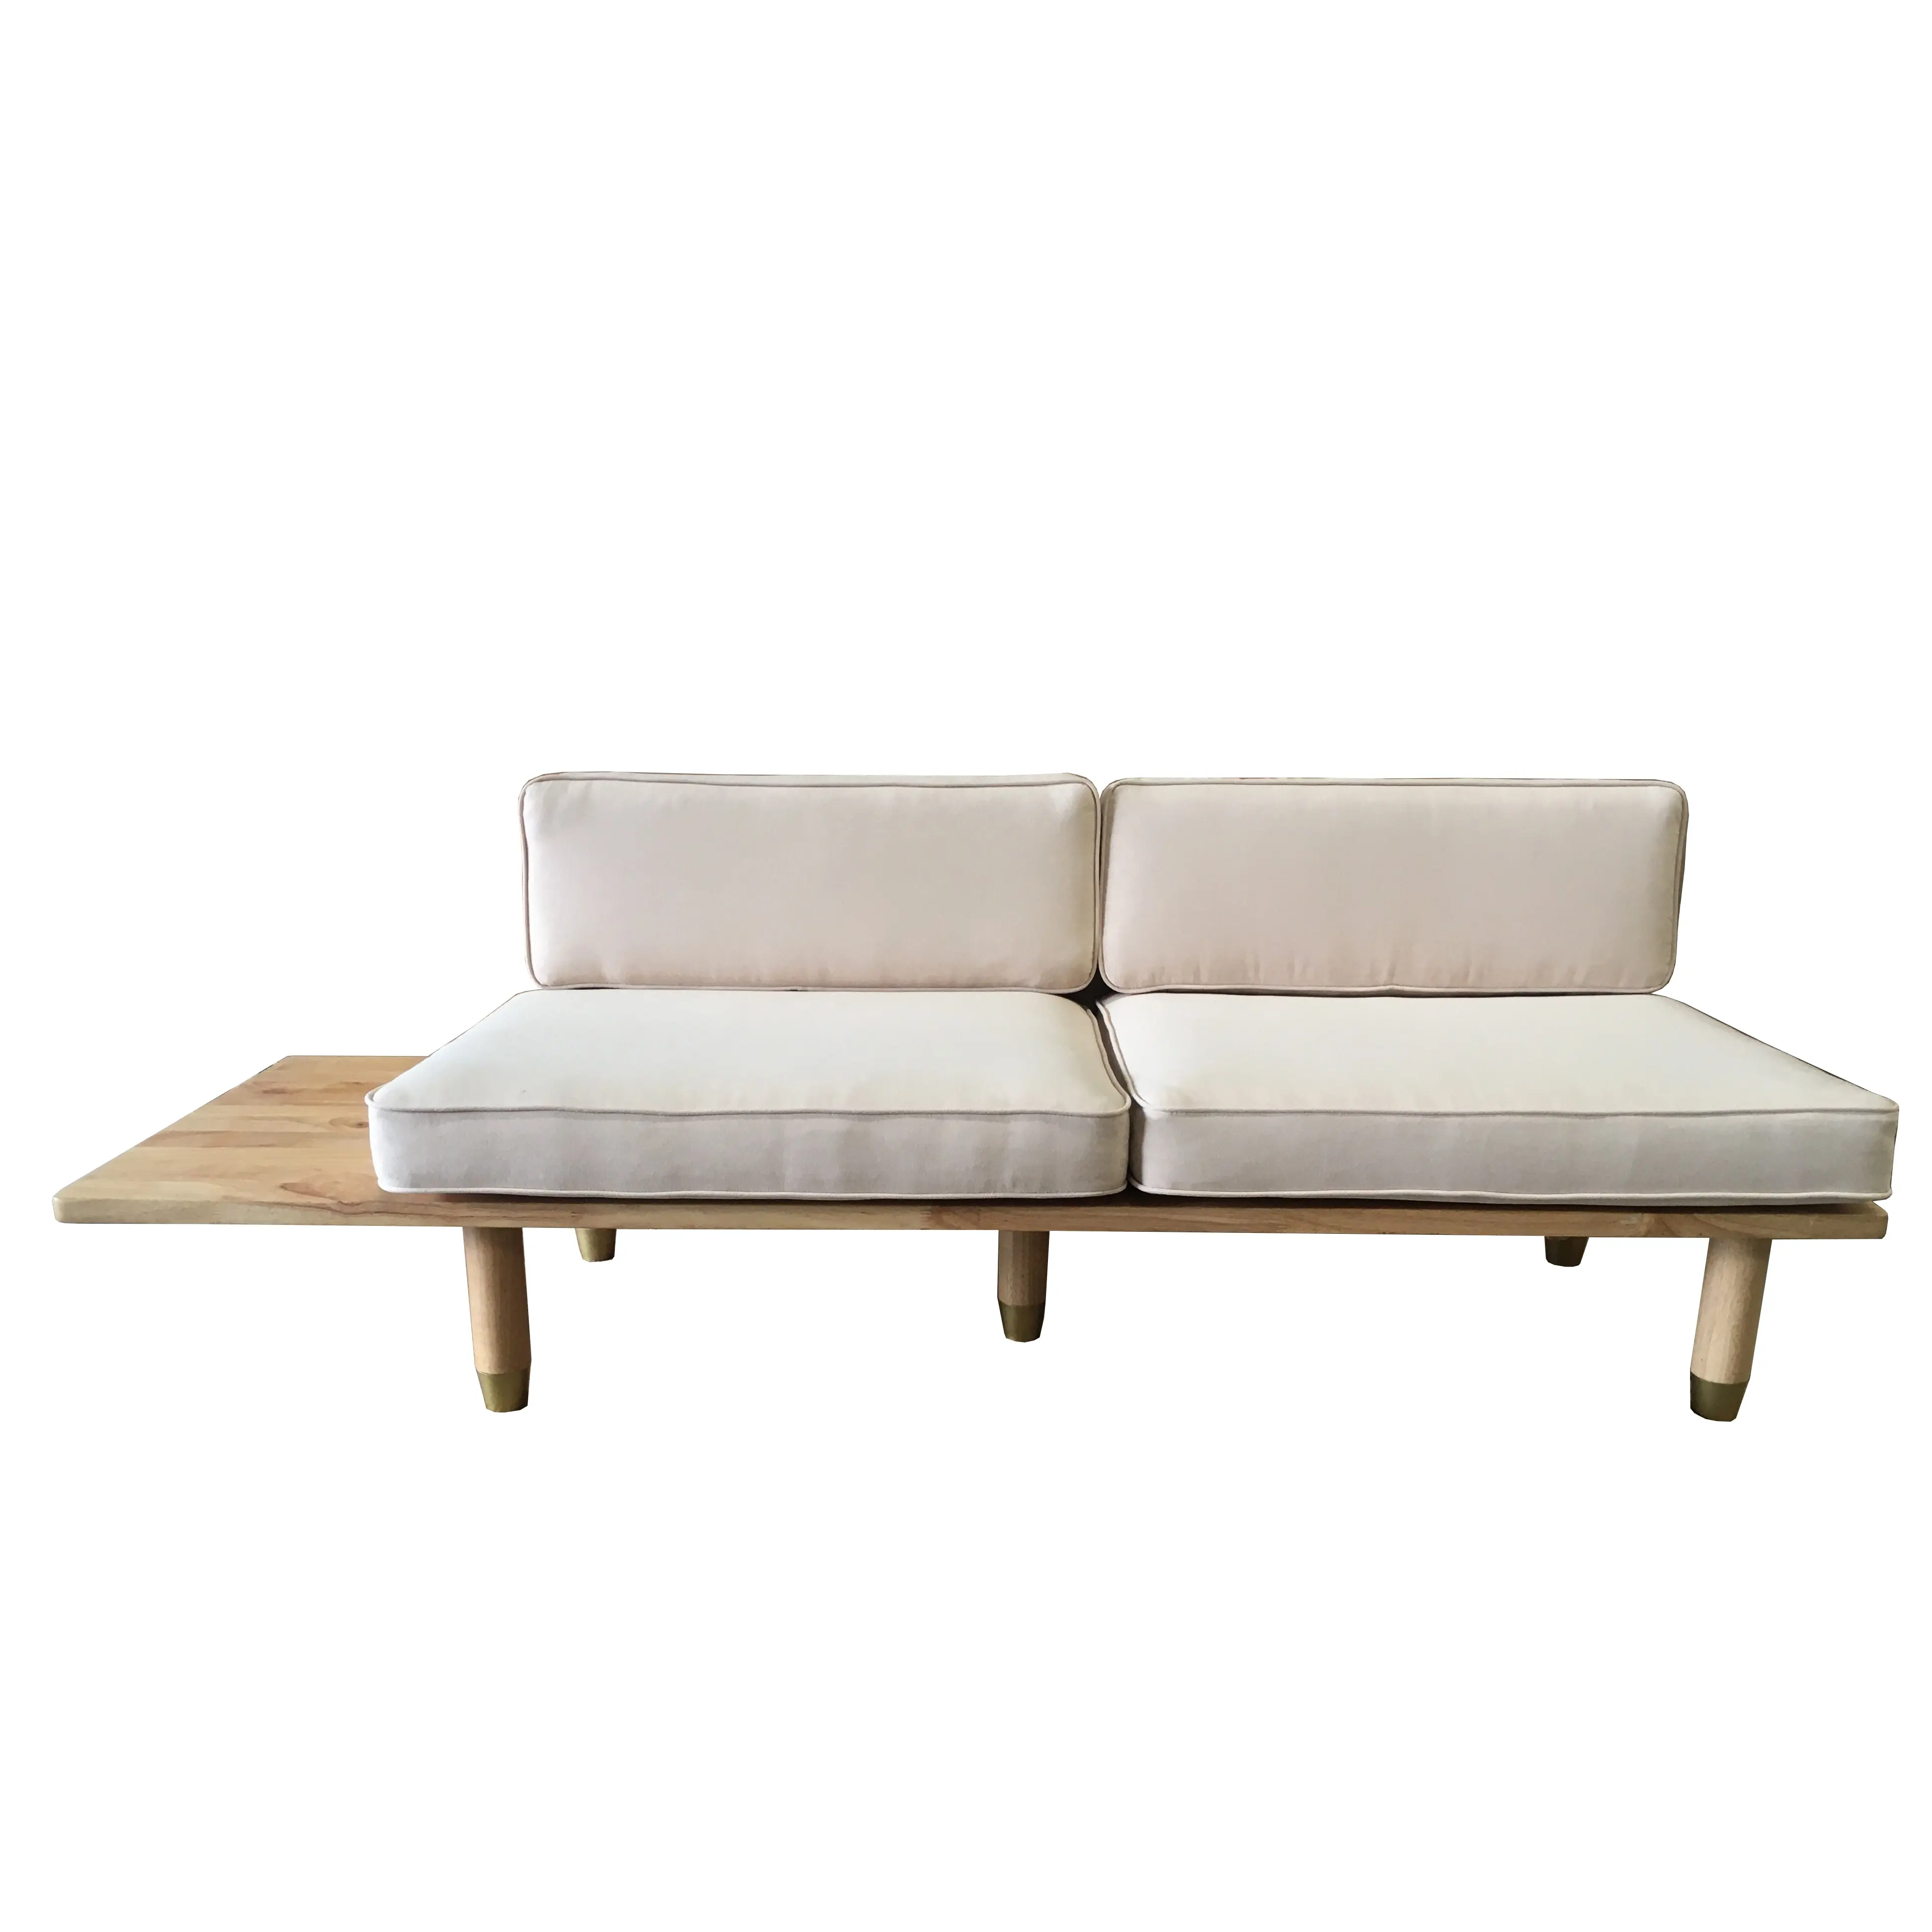 Fabrika fiyat lüks Modern meşe ahşap kanepe mobilya oturma odası vietnam'da yapılan